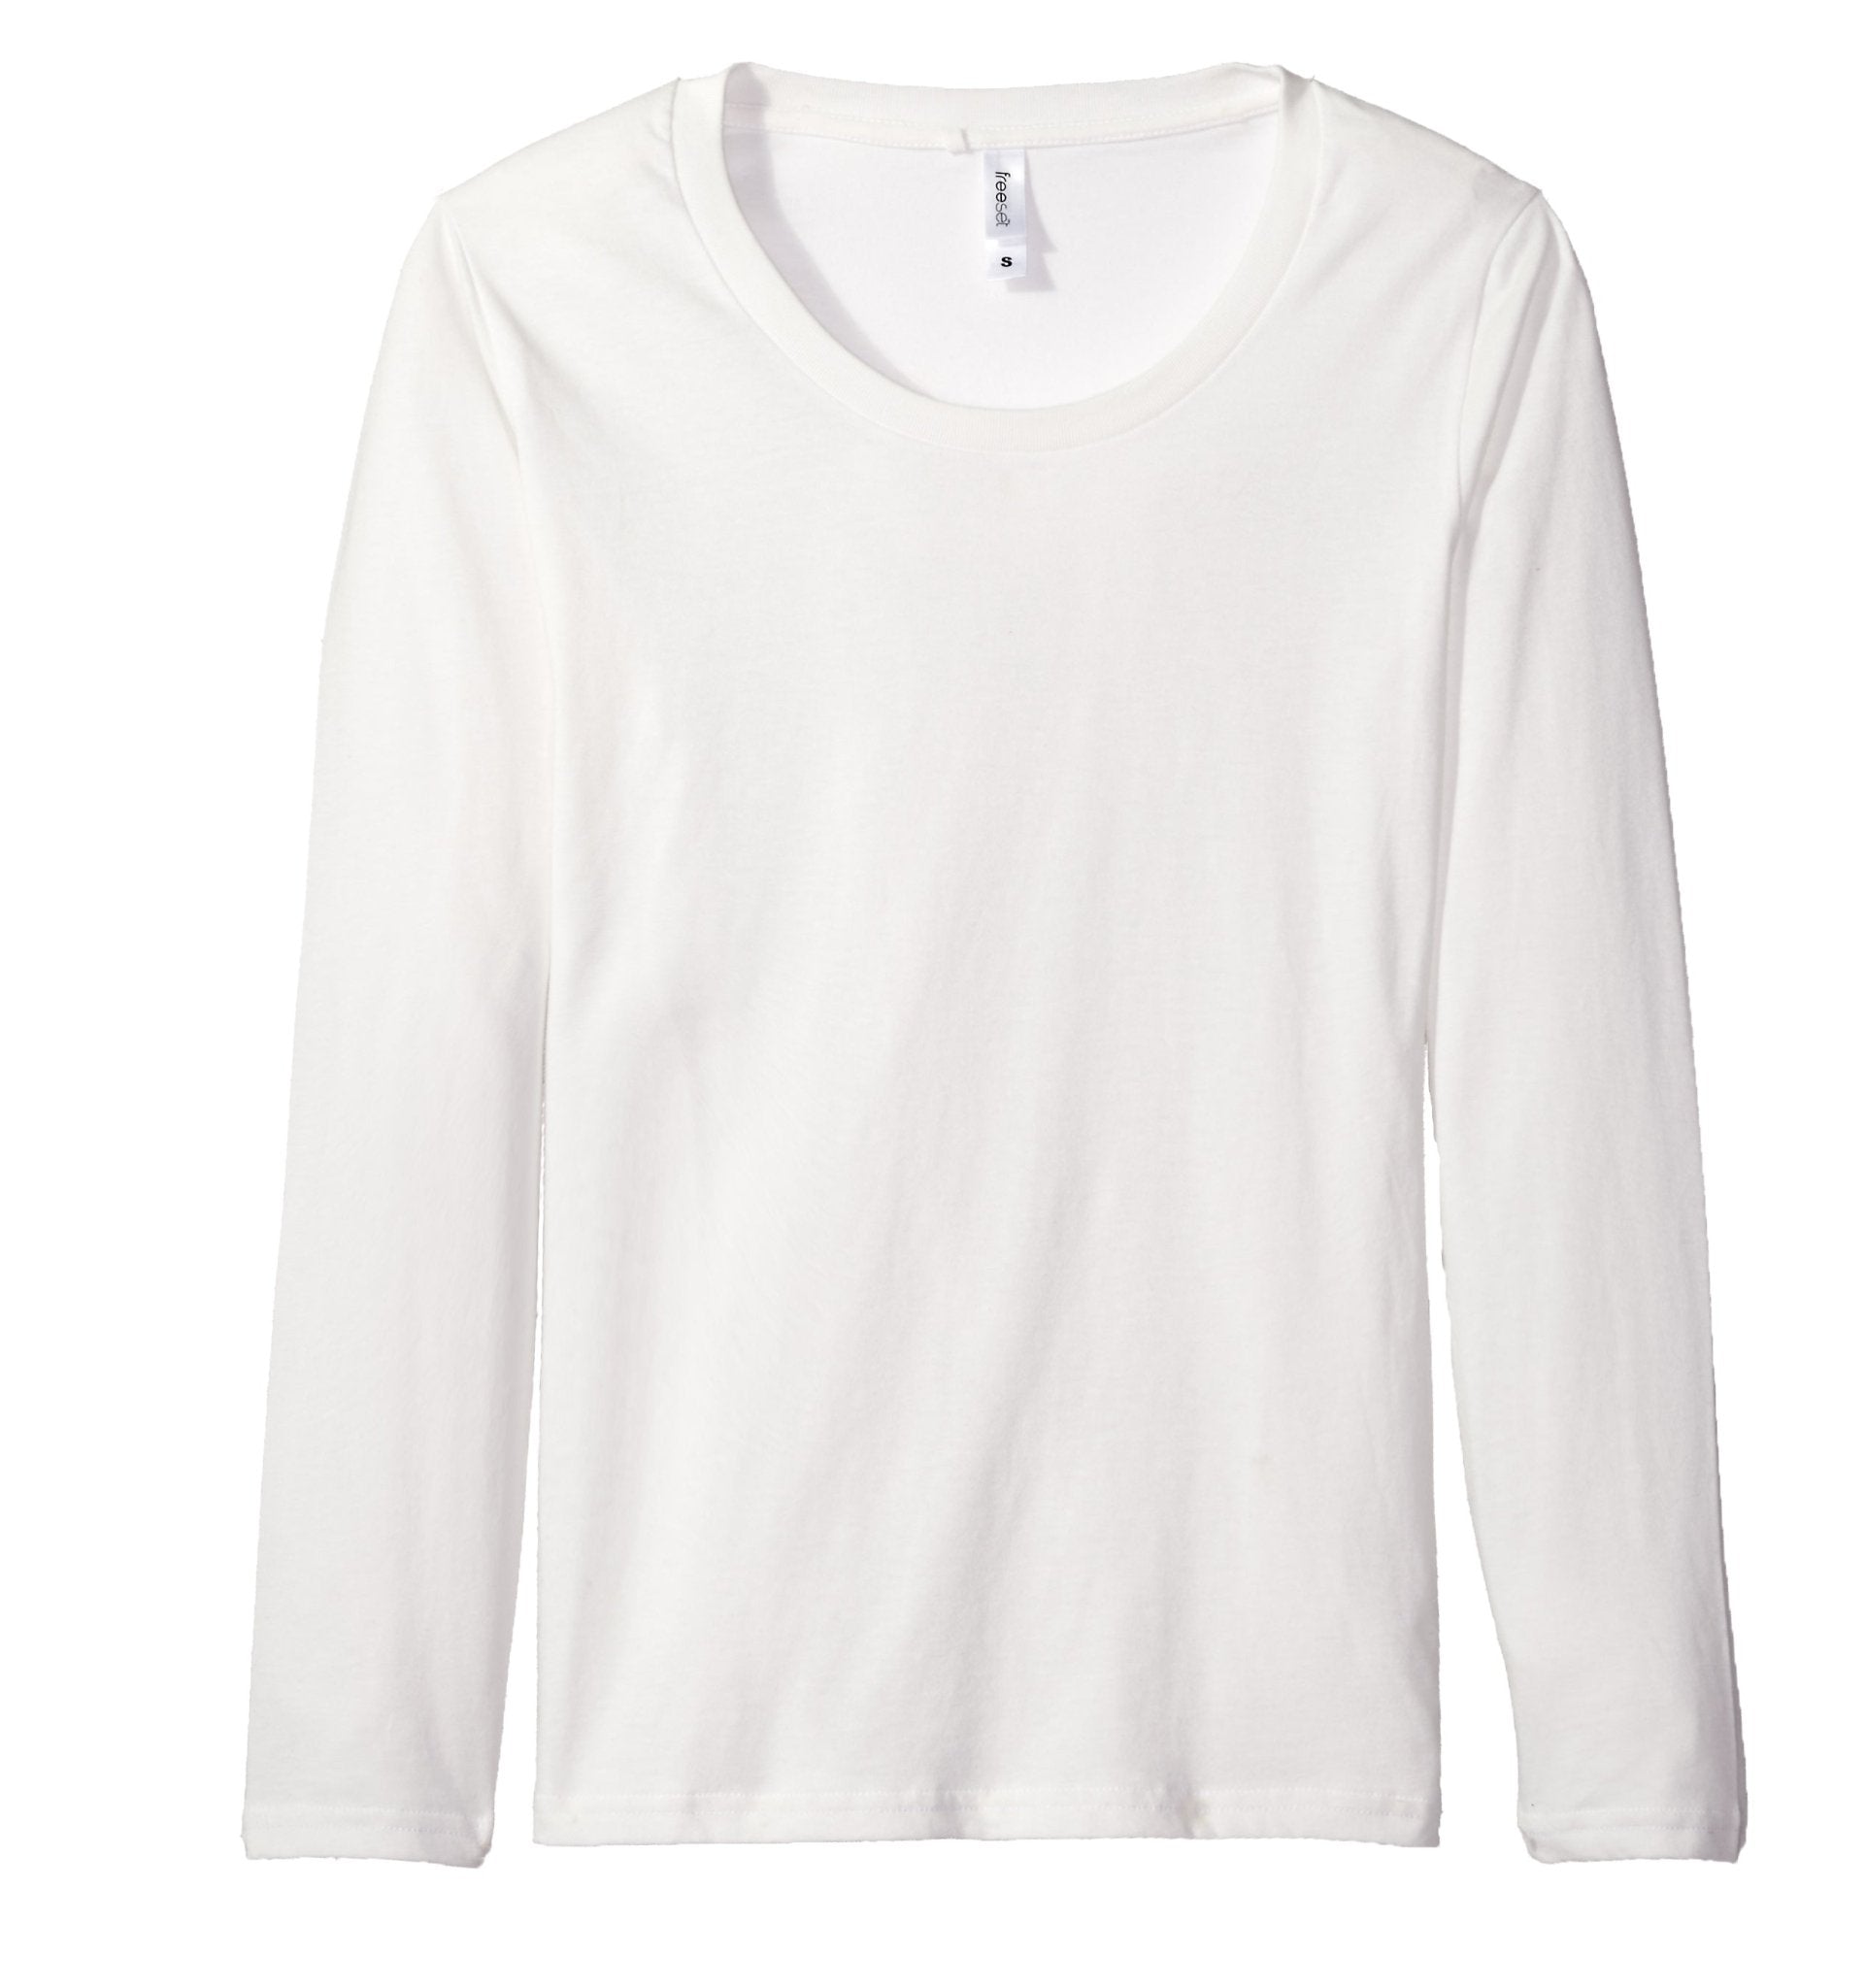 Joyya - T-shirt | Women Long Sleeve | Freeset - T-Shirt - Natural White - FREESET - WOMEN-L-WH-XS